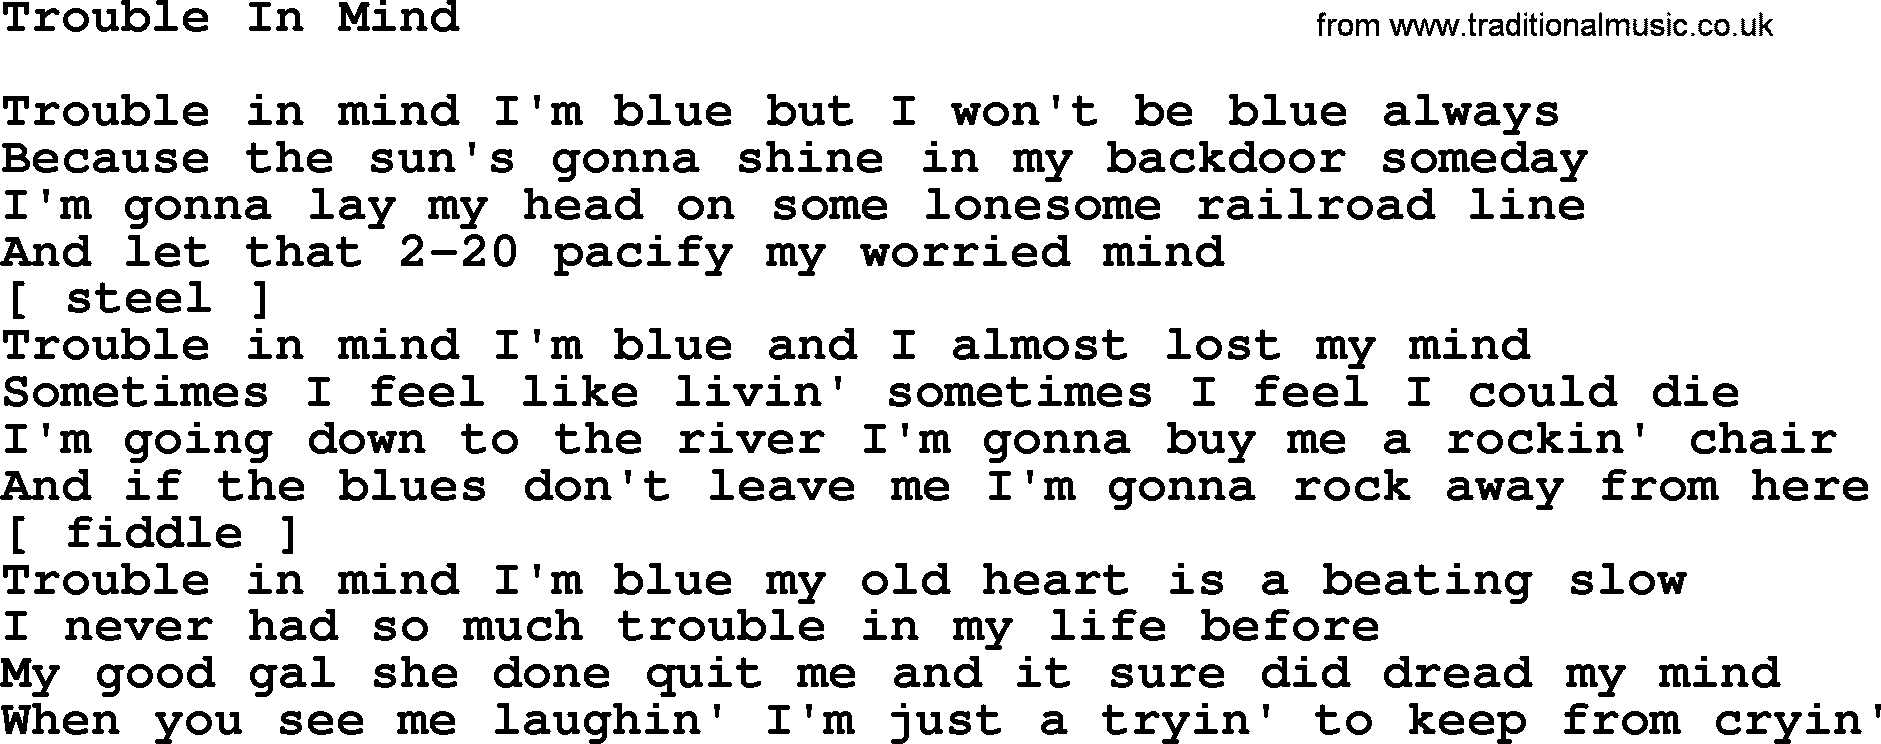 George Jones song: Trouble In Mind, lyrics